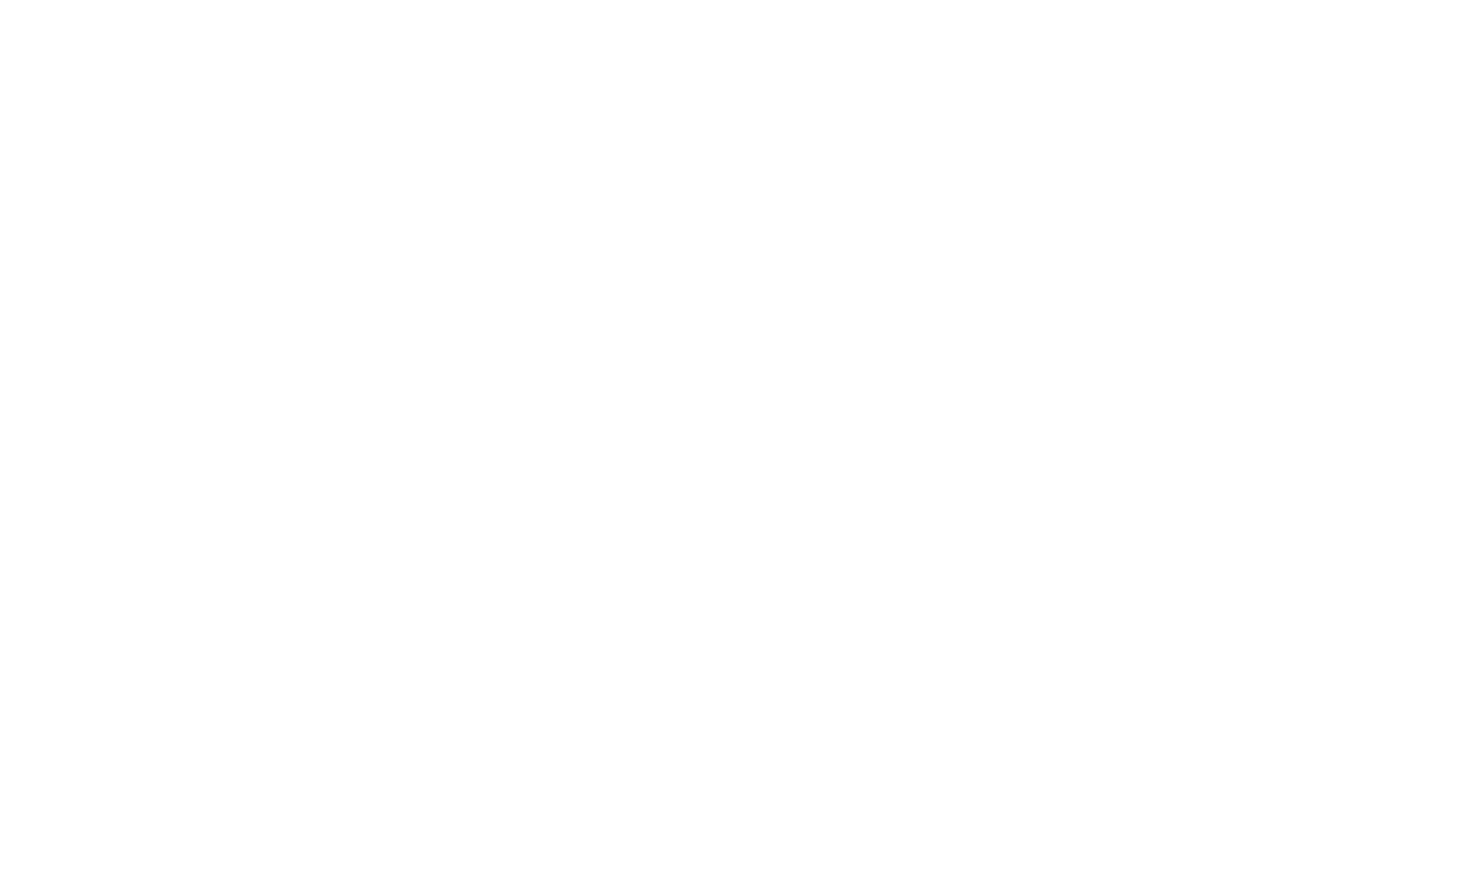 The Murder Inc Story logo